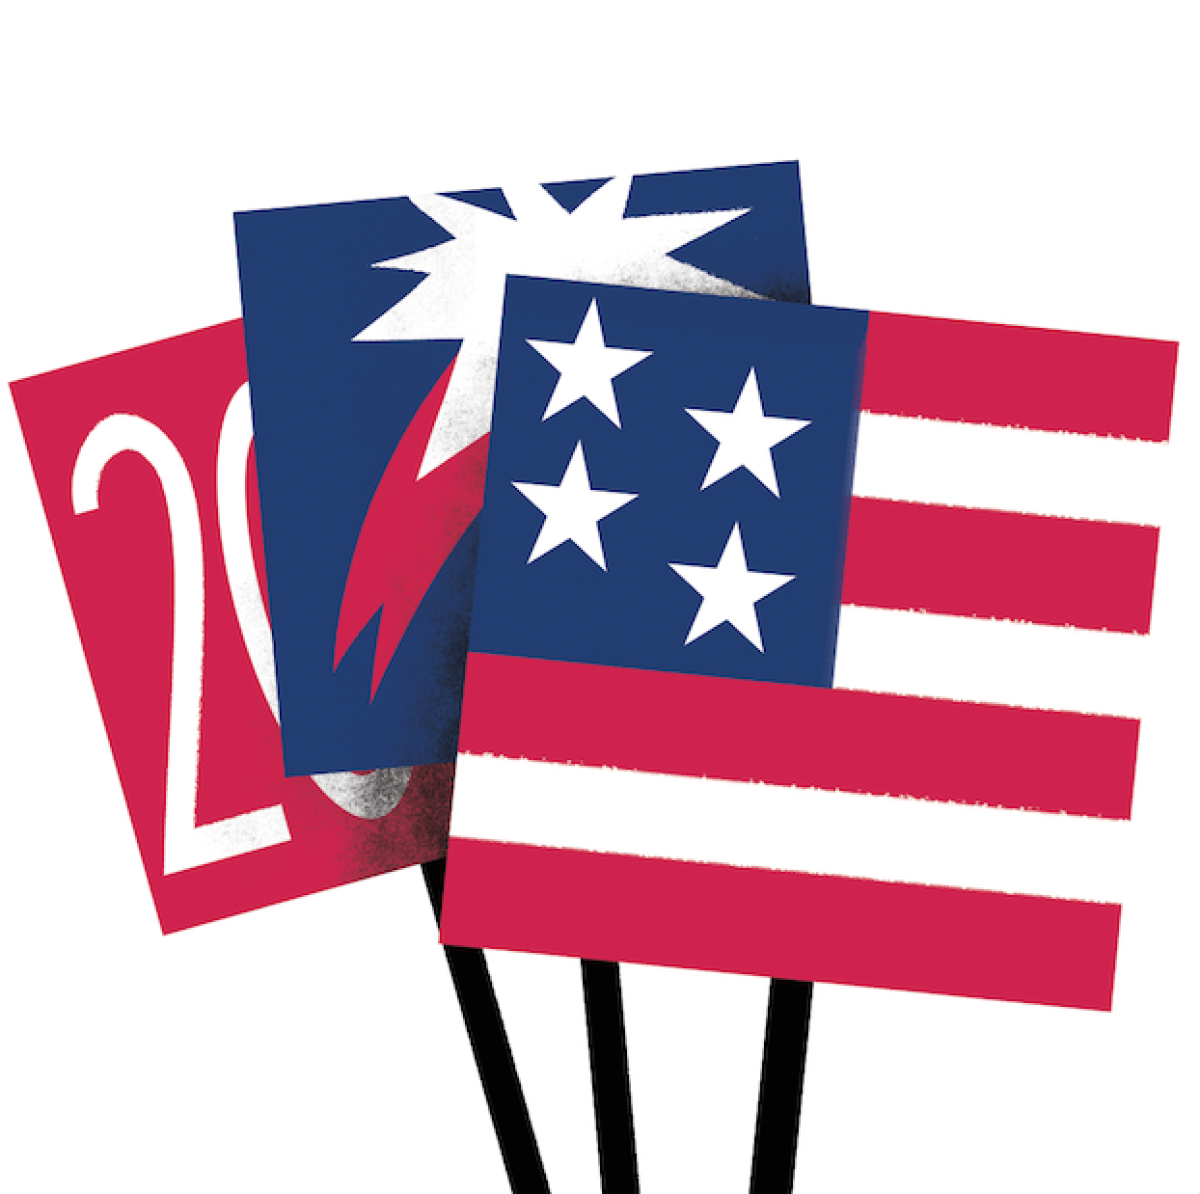 The Essential Politics logo: three flags.